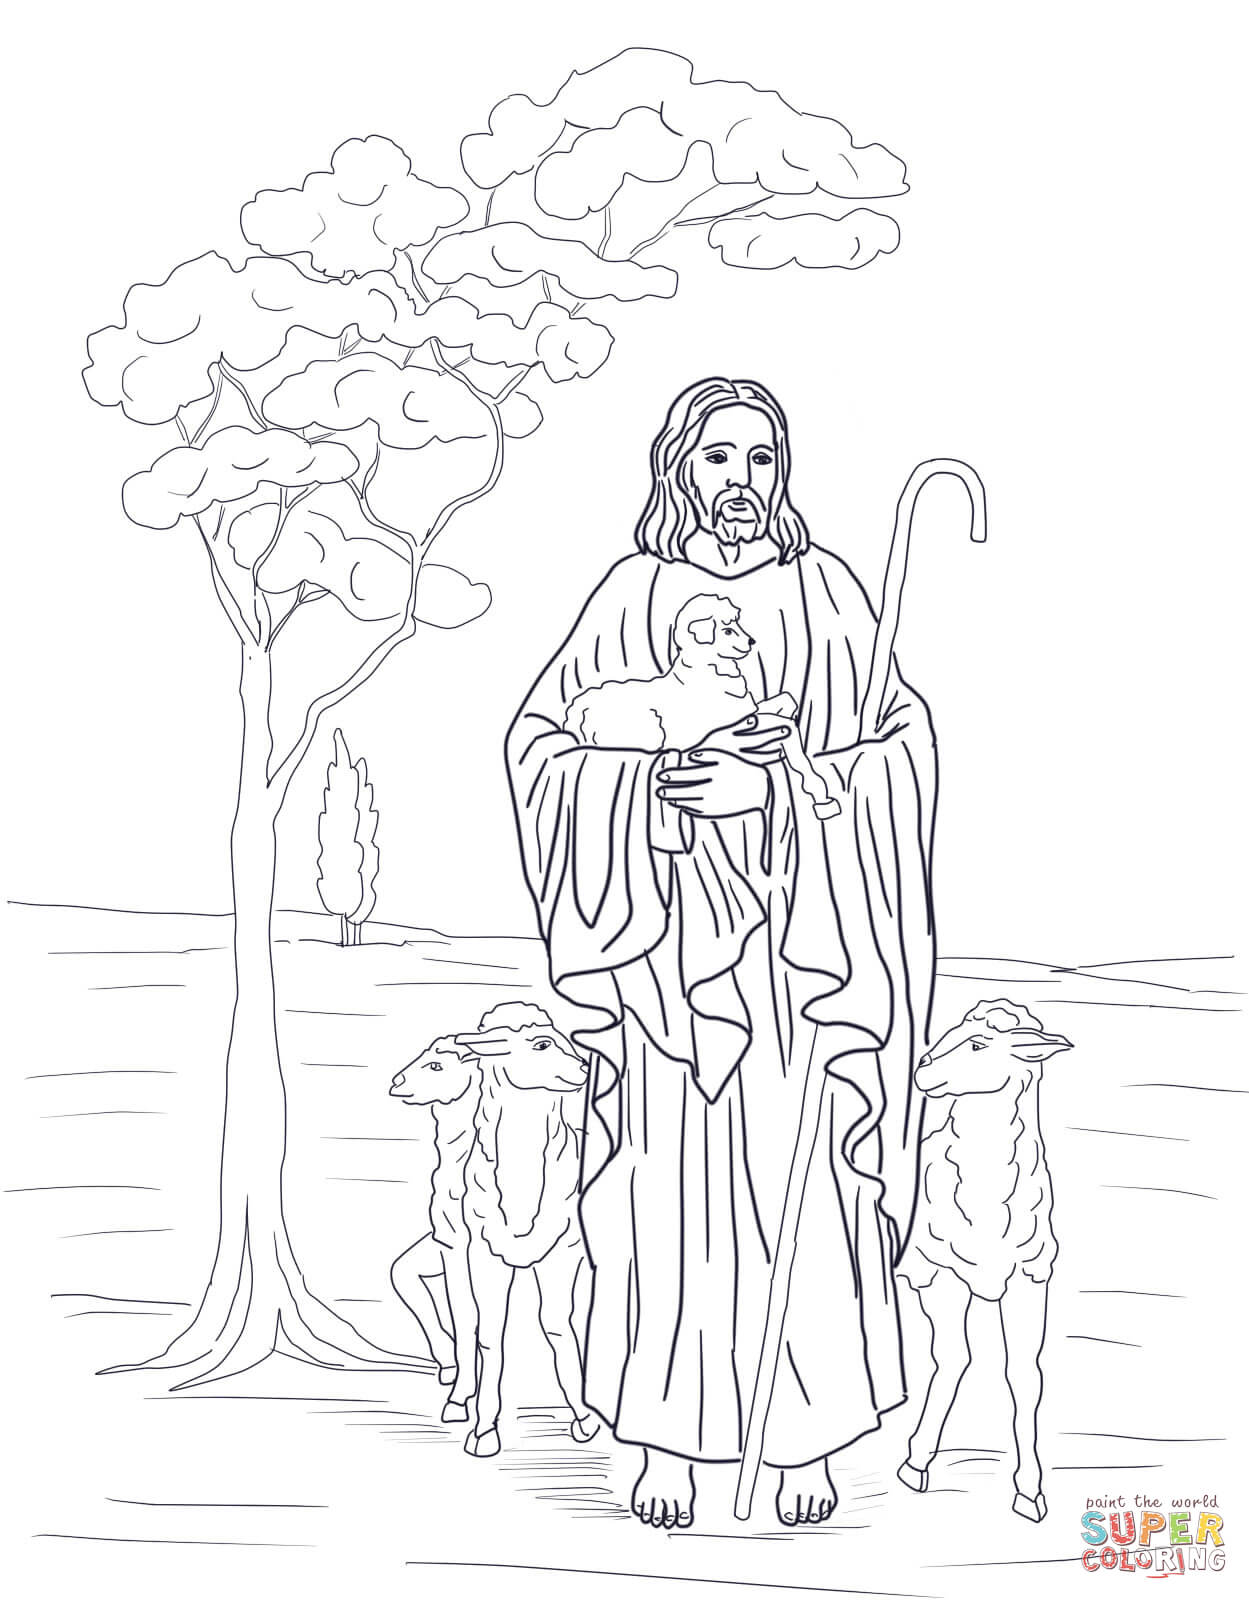 White Shepherd coloring #12, Download drawings